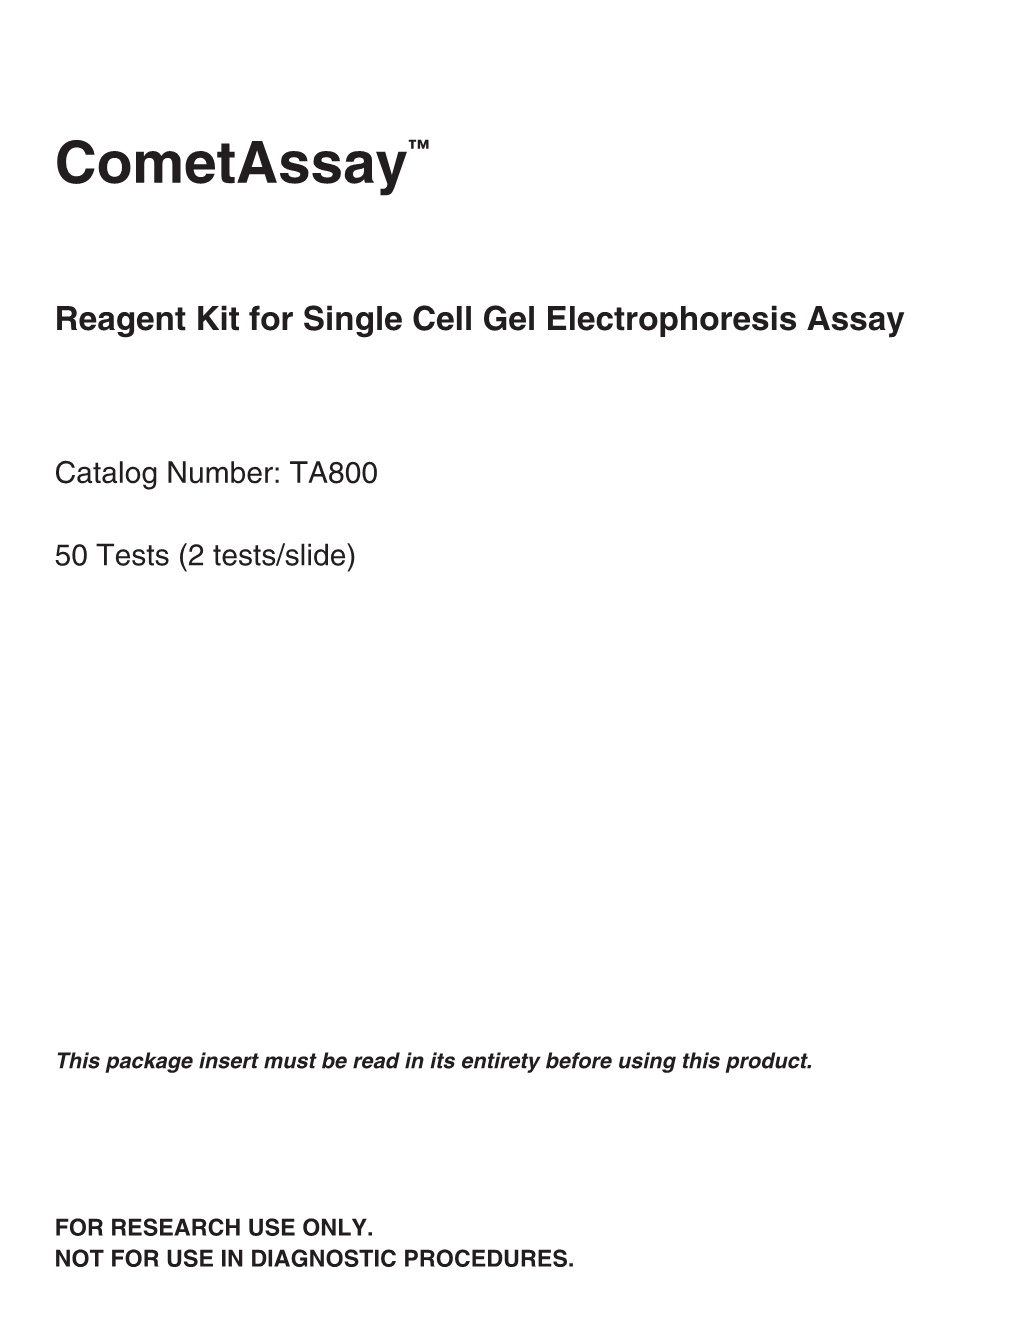 Cometassay Single Cell Gel Electrophoresis Assay